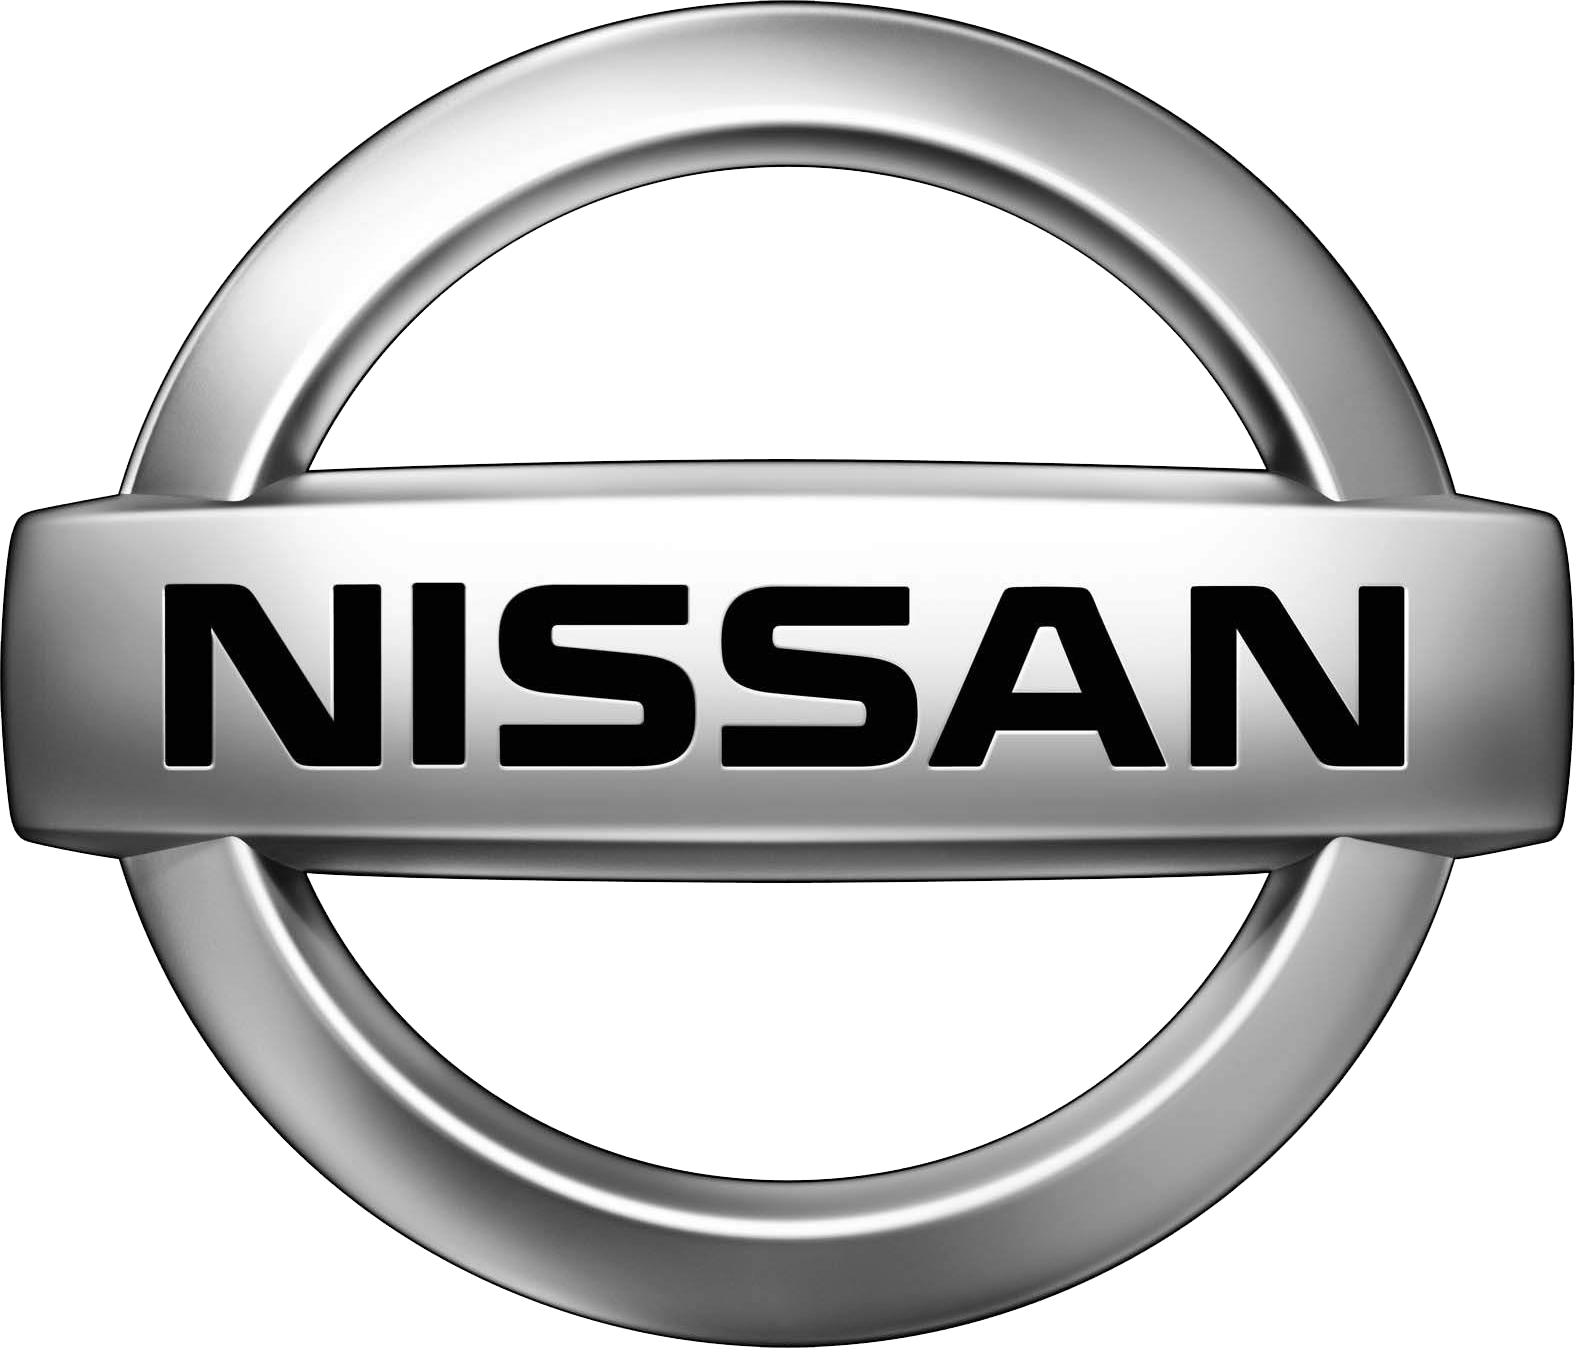 Nissan Car Logo Png Brand Image - Nissan, Transparent background PNG HD thumbnail